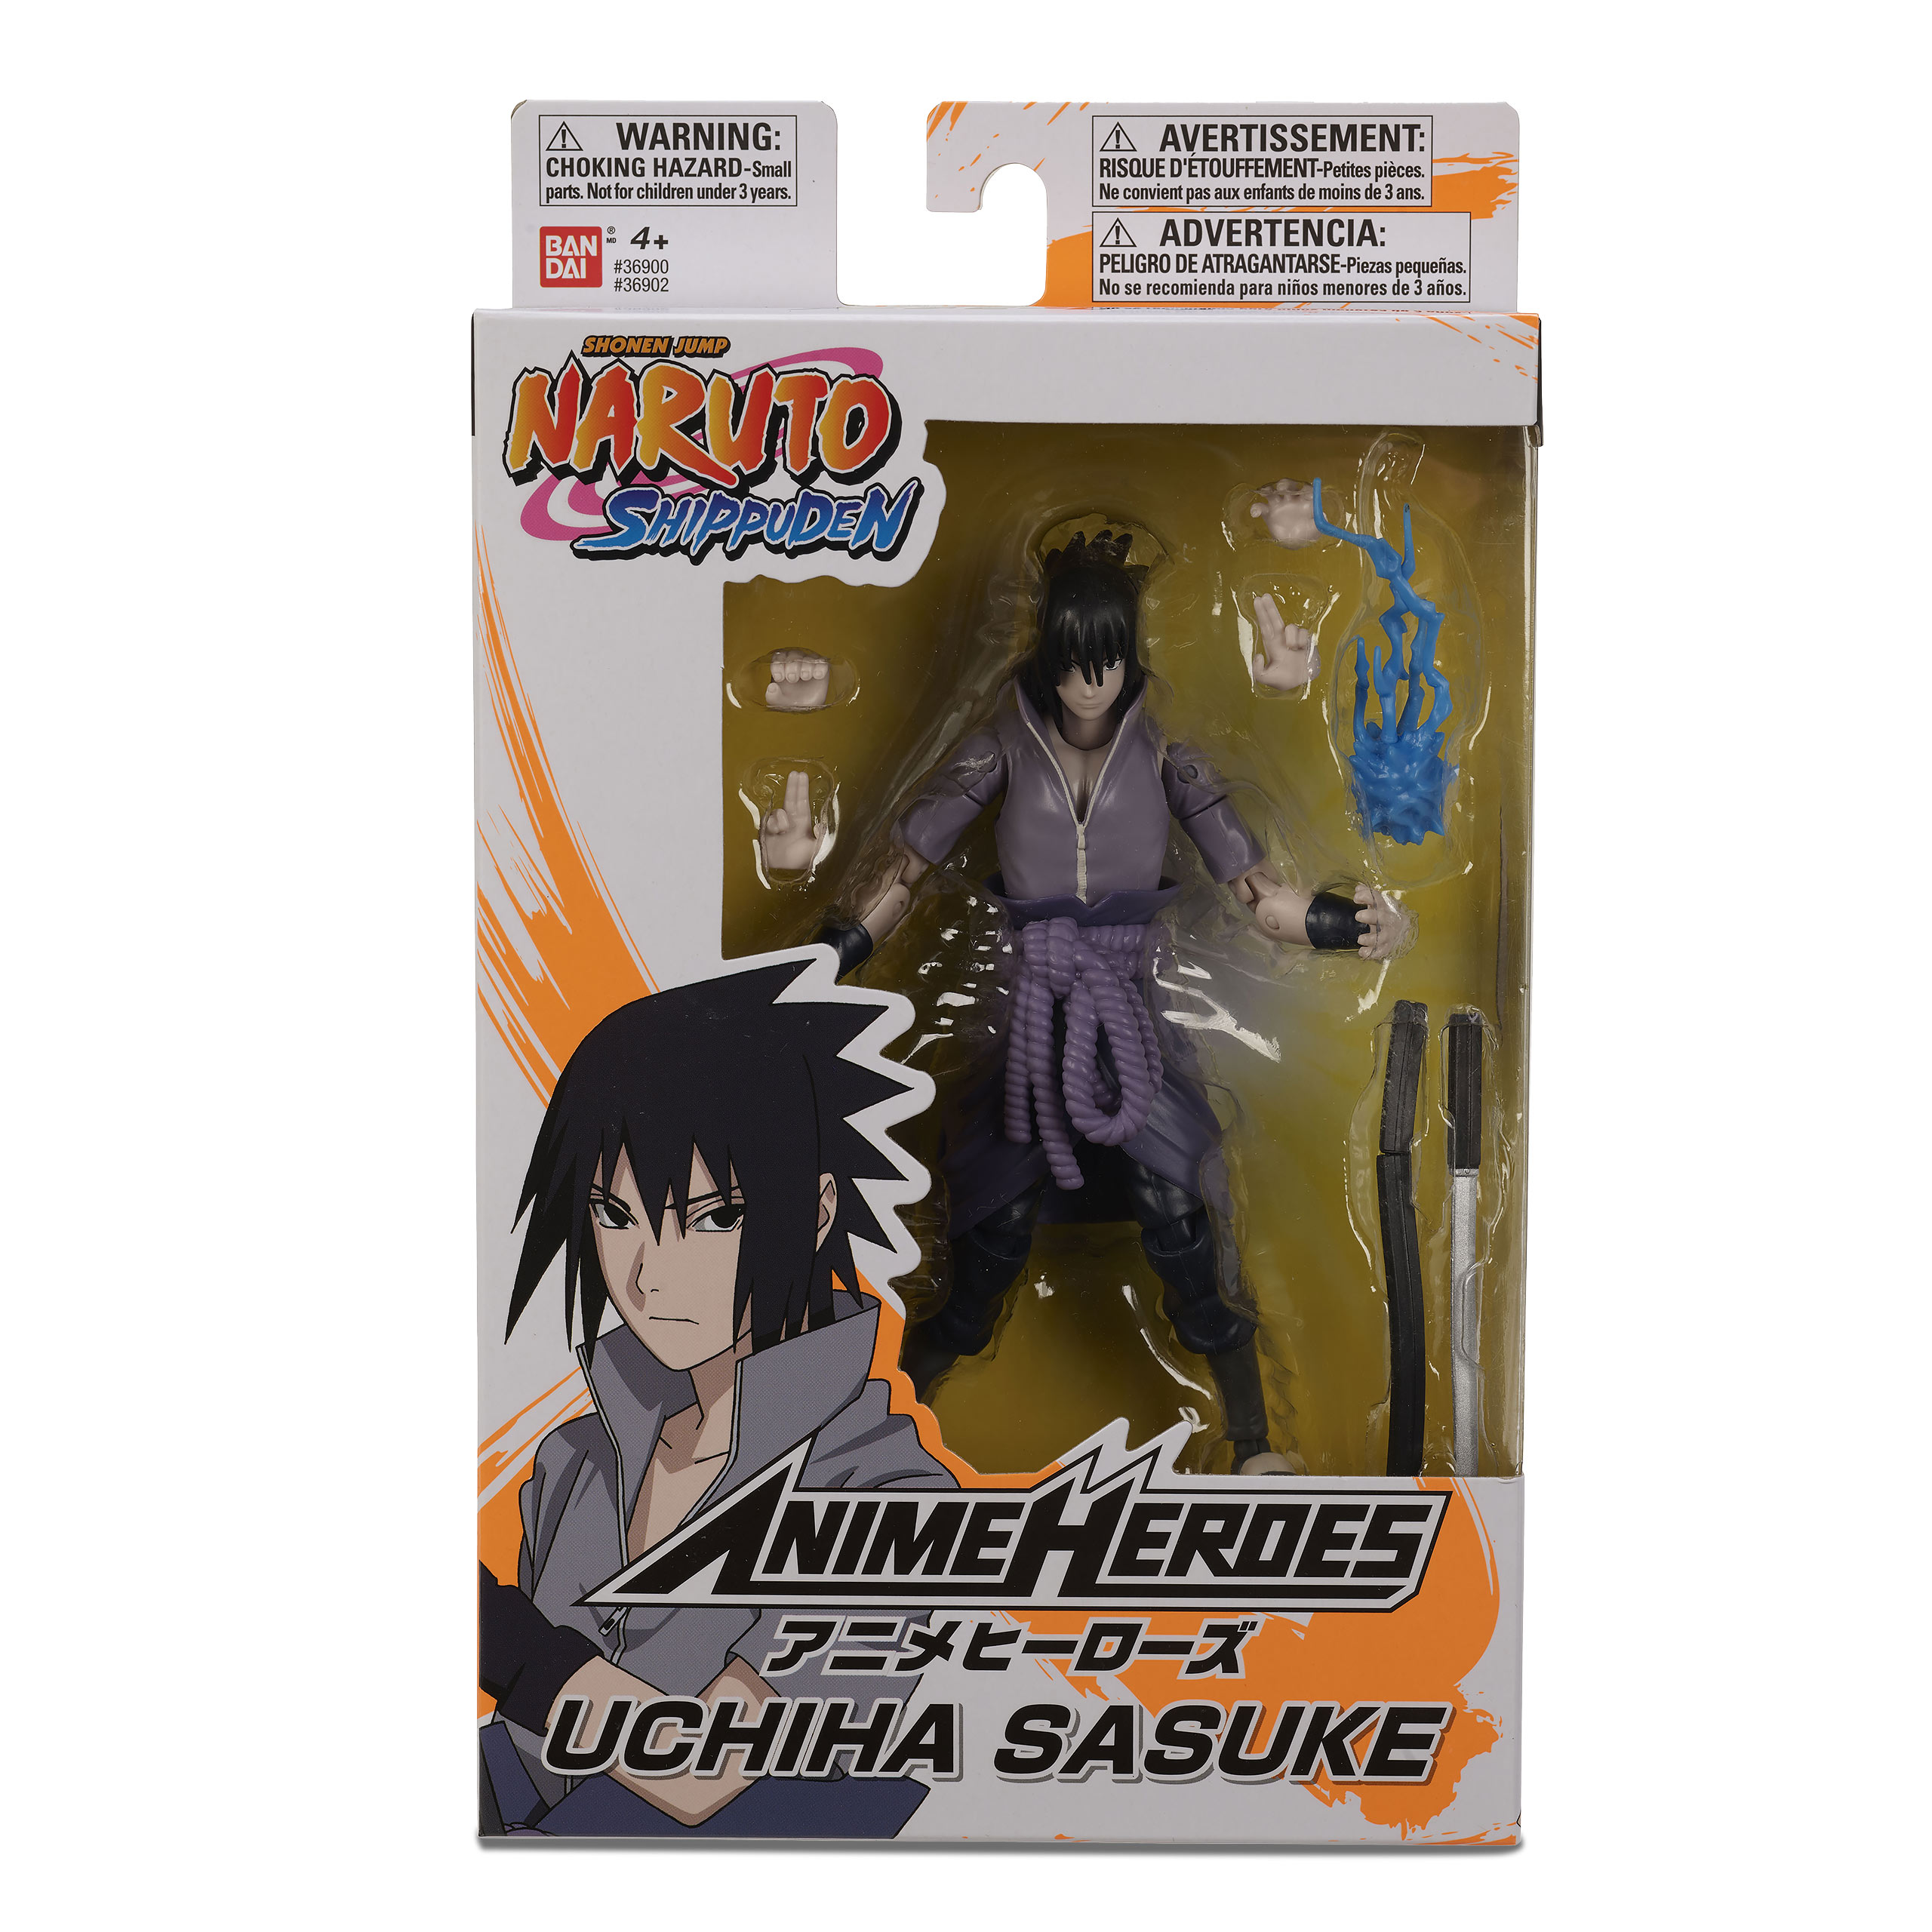 Naruto Shippuden - Uchiha Sasuke Anime Heroes Actiefiguur